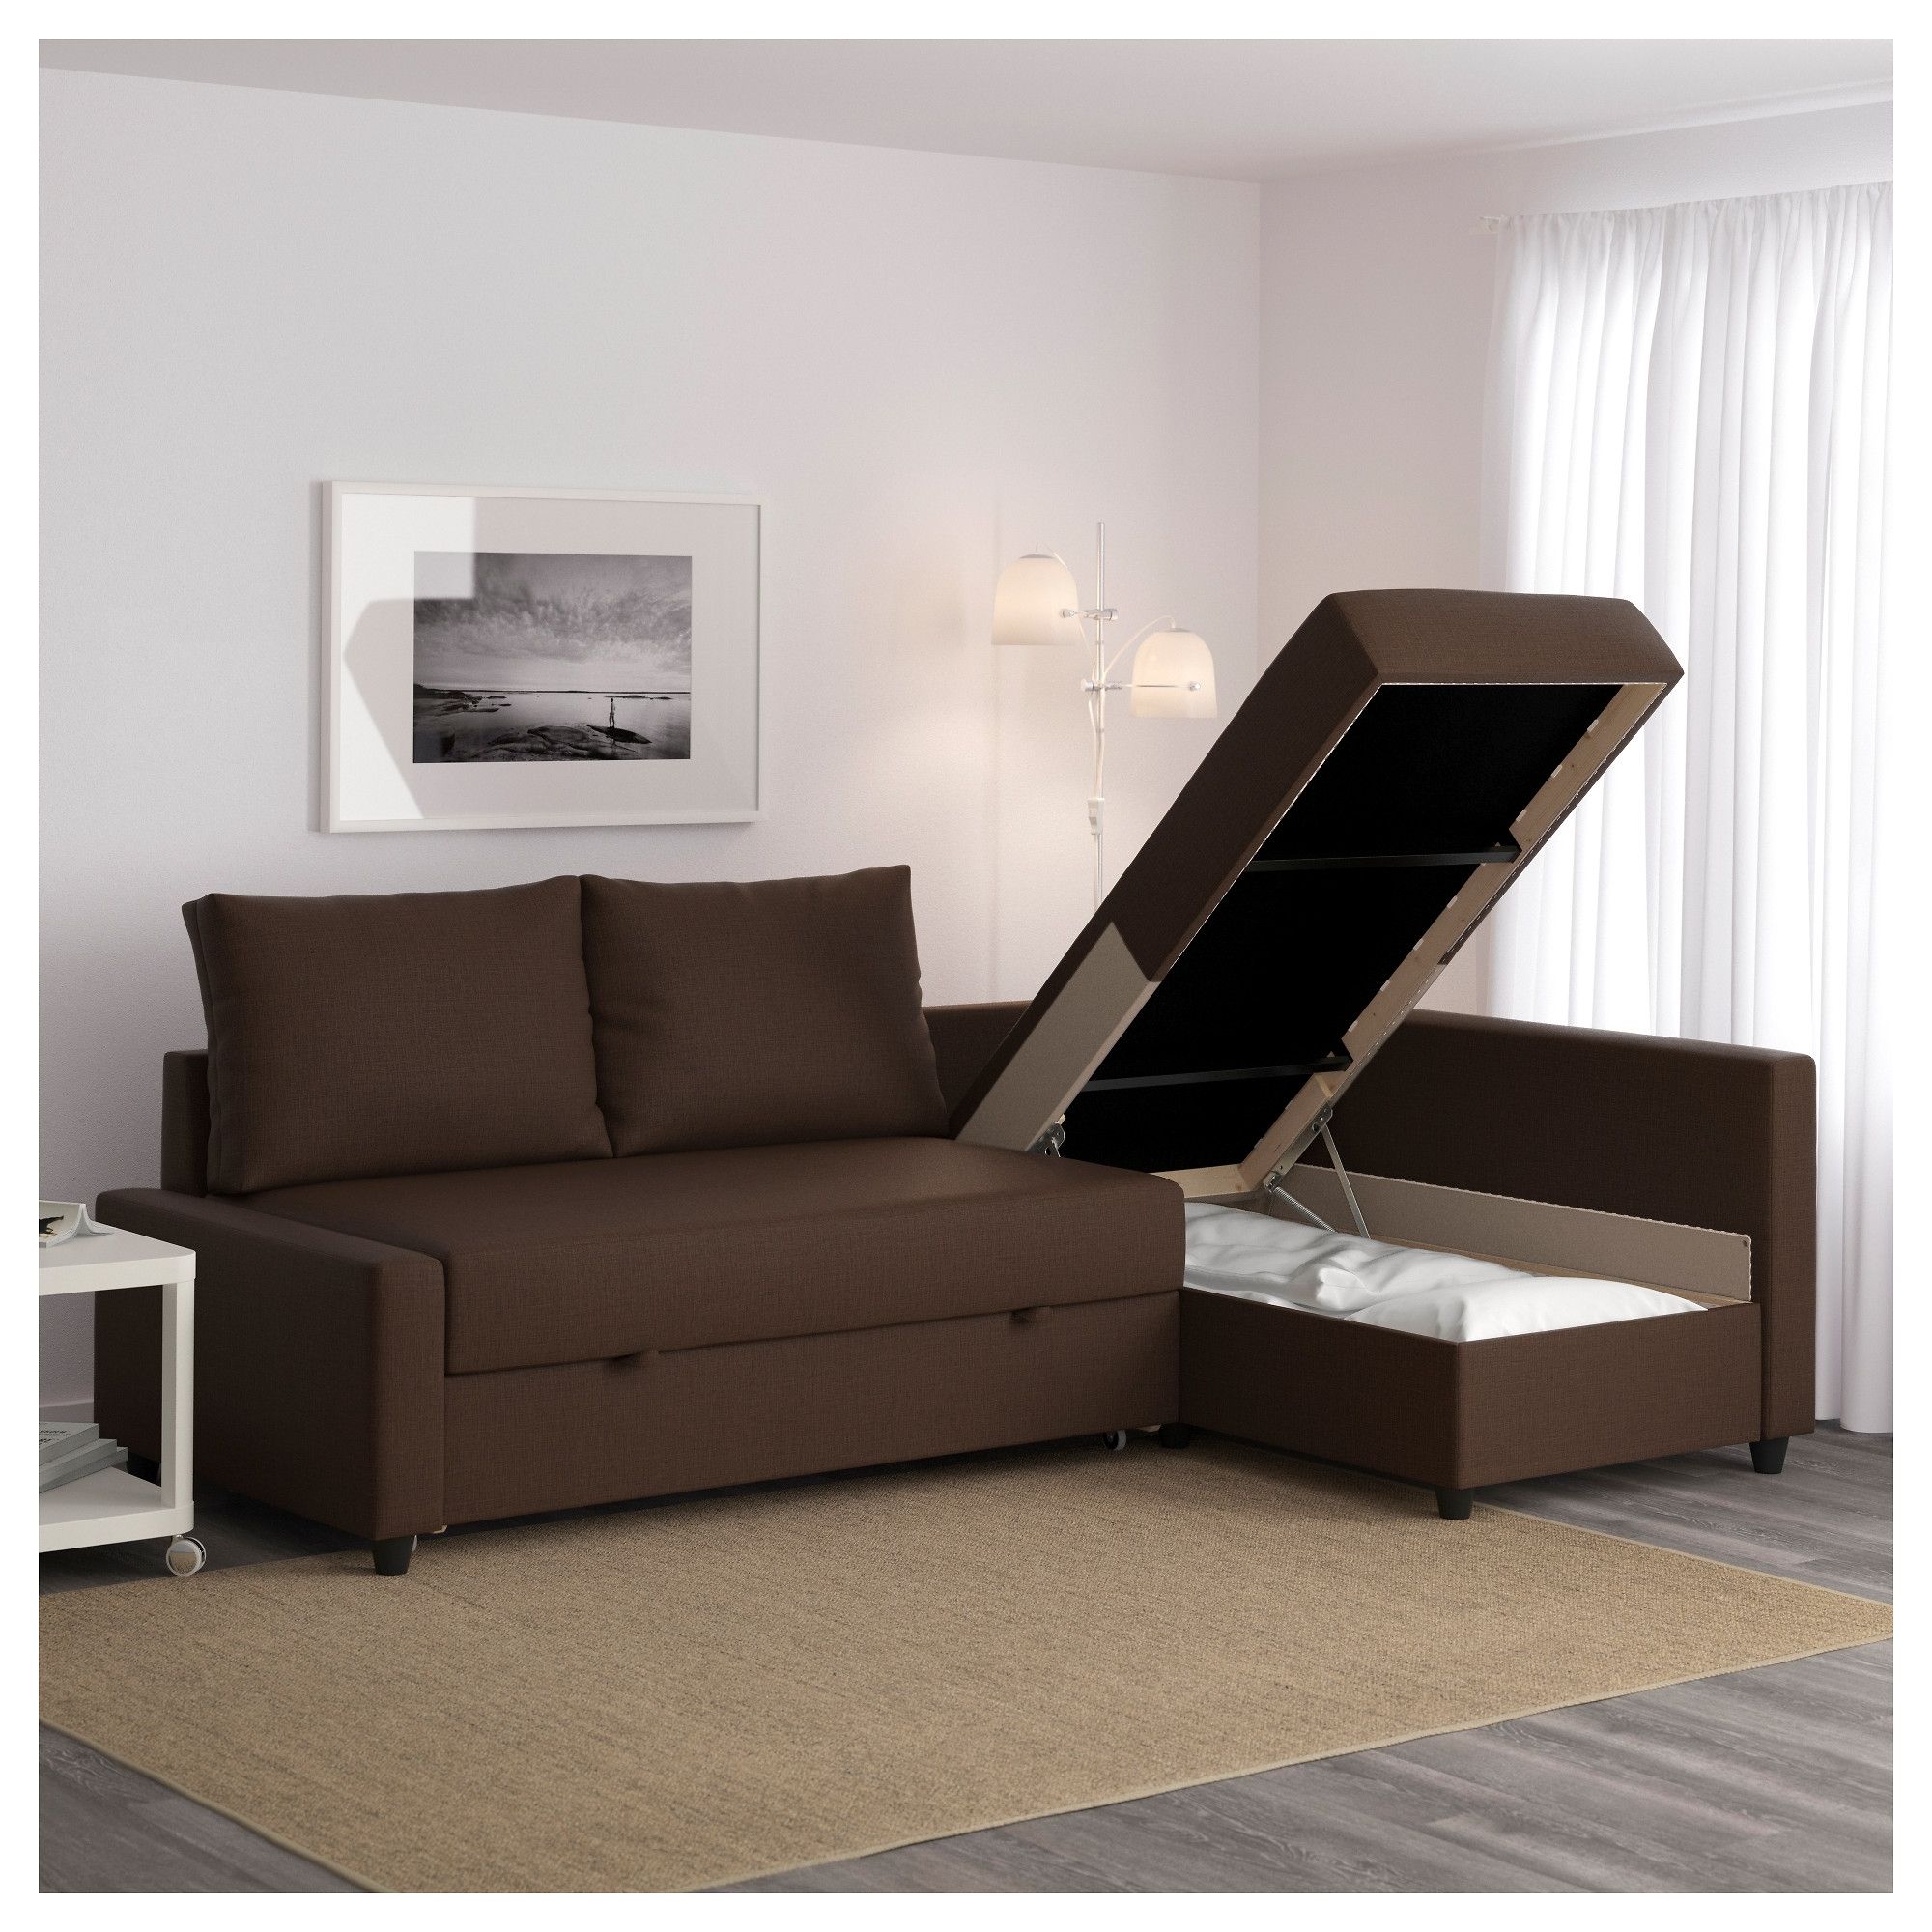 Most Recent Ikea Sectional Sleeper Sofas Pertaining To Friheten Sleeper Sectional,3 Seat W/storage – Skiftebo Dark Orange (View 12 of 20)